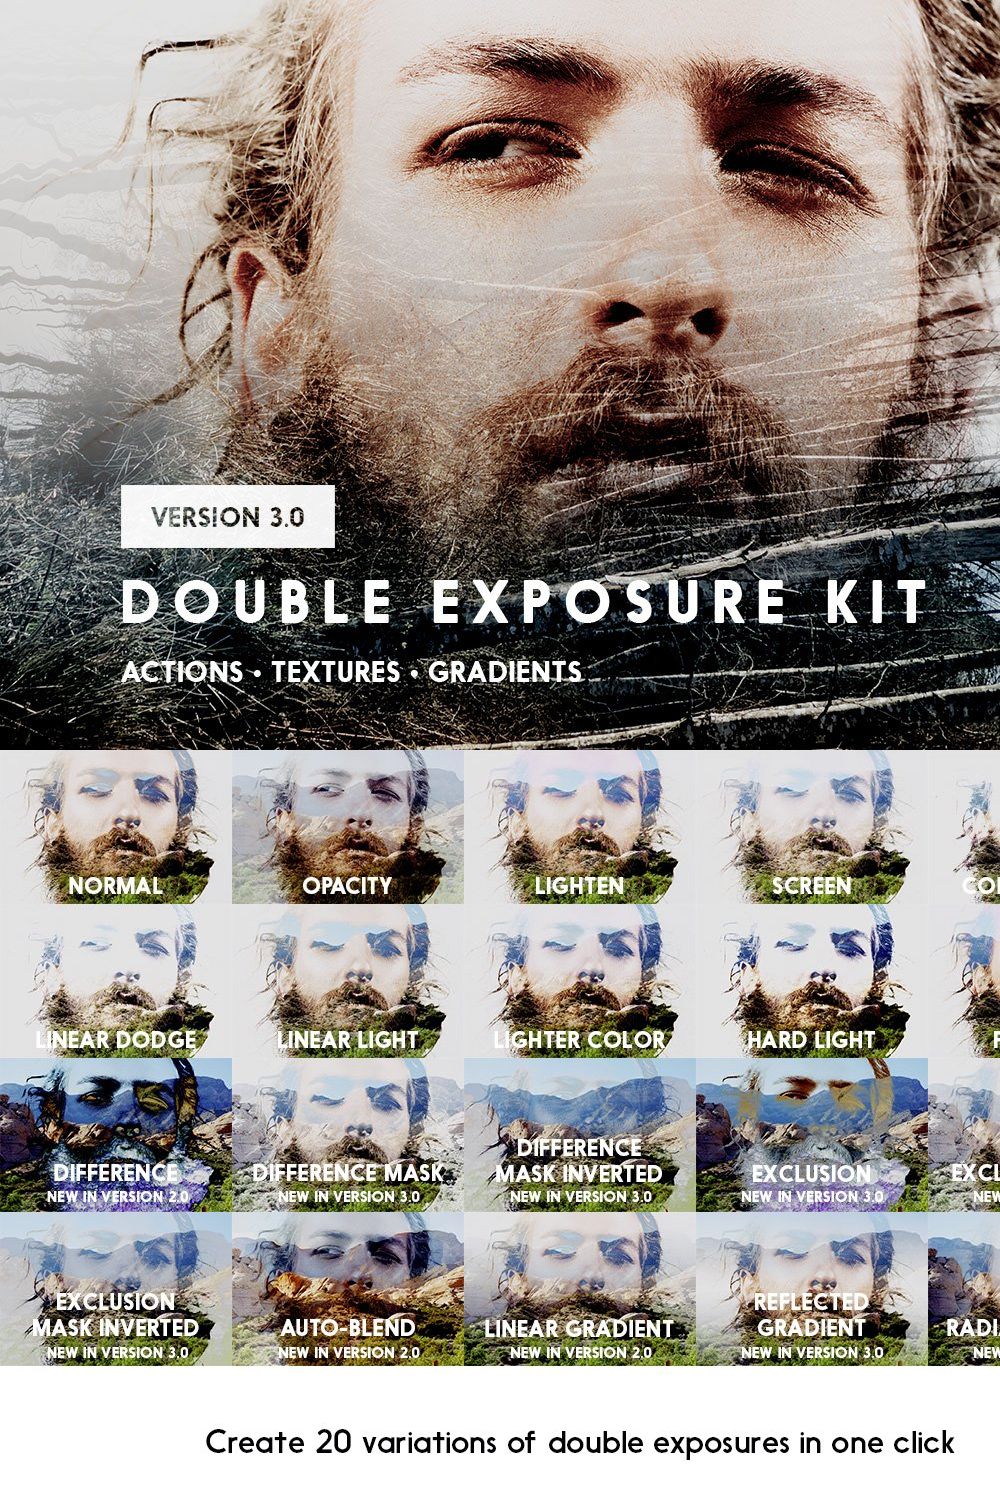 Double Exposure Kit pinterest preview image.